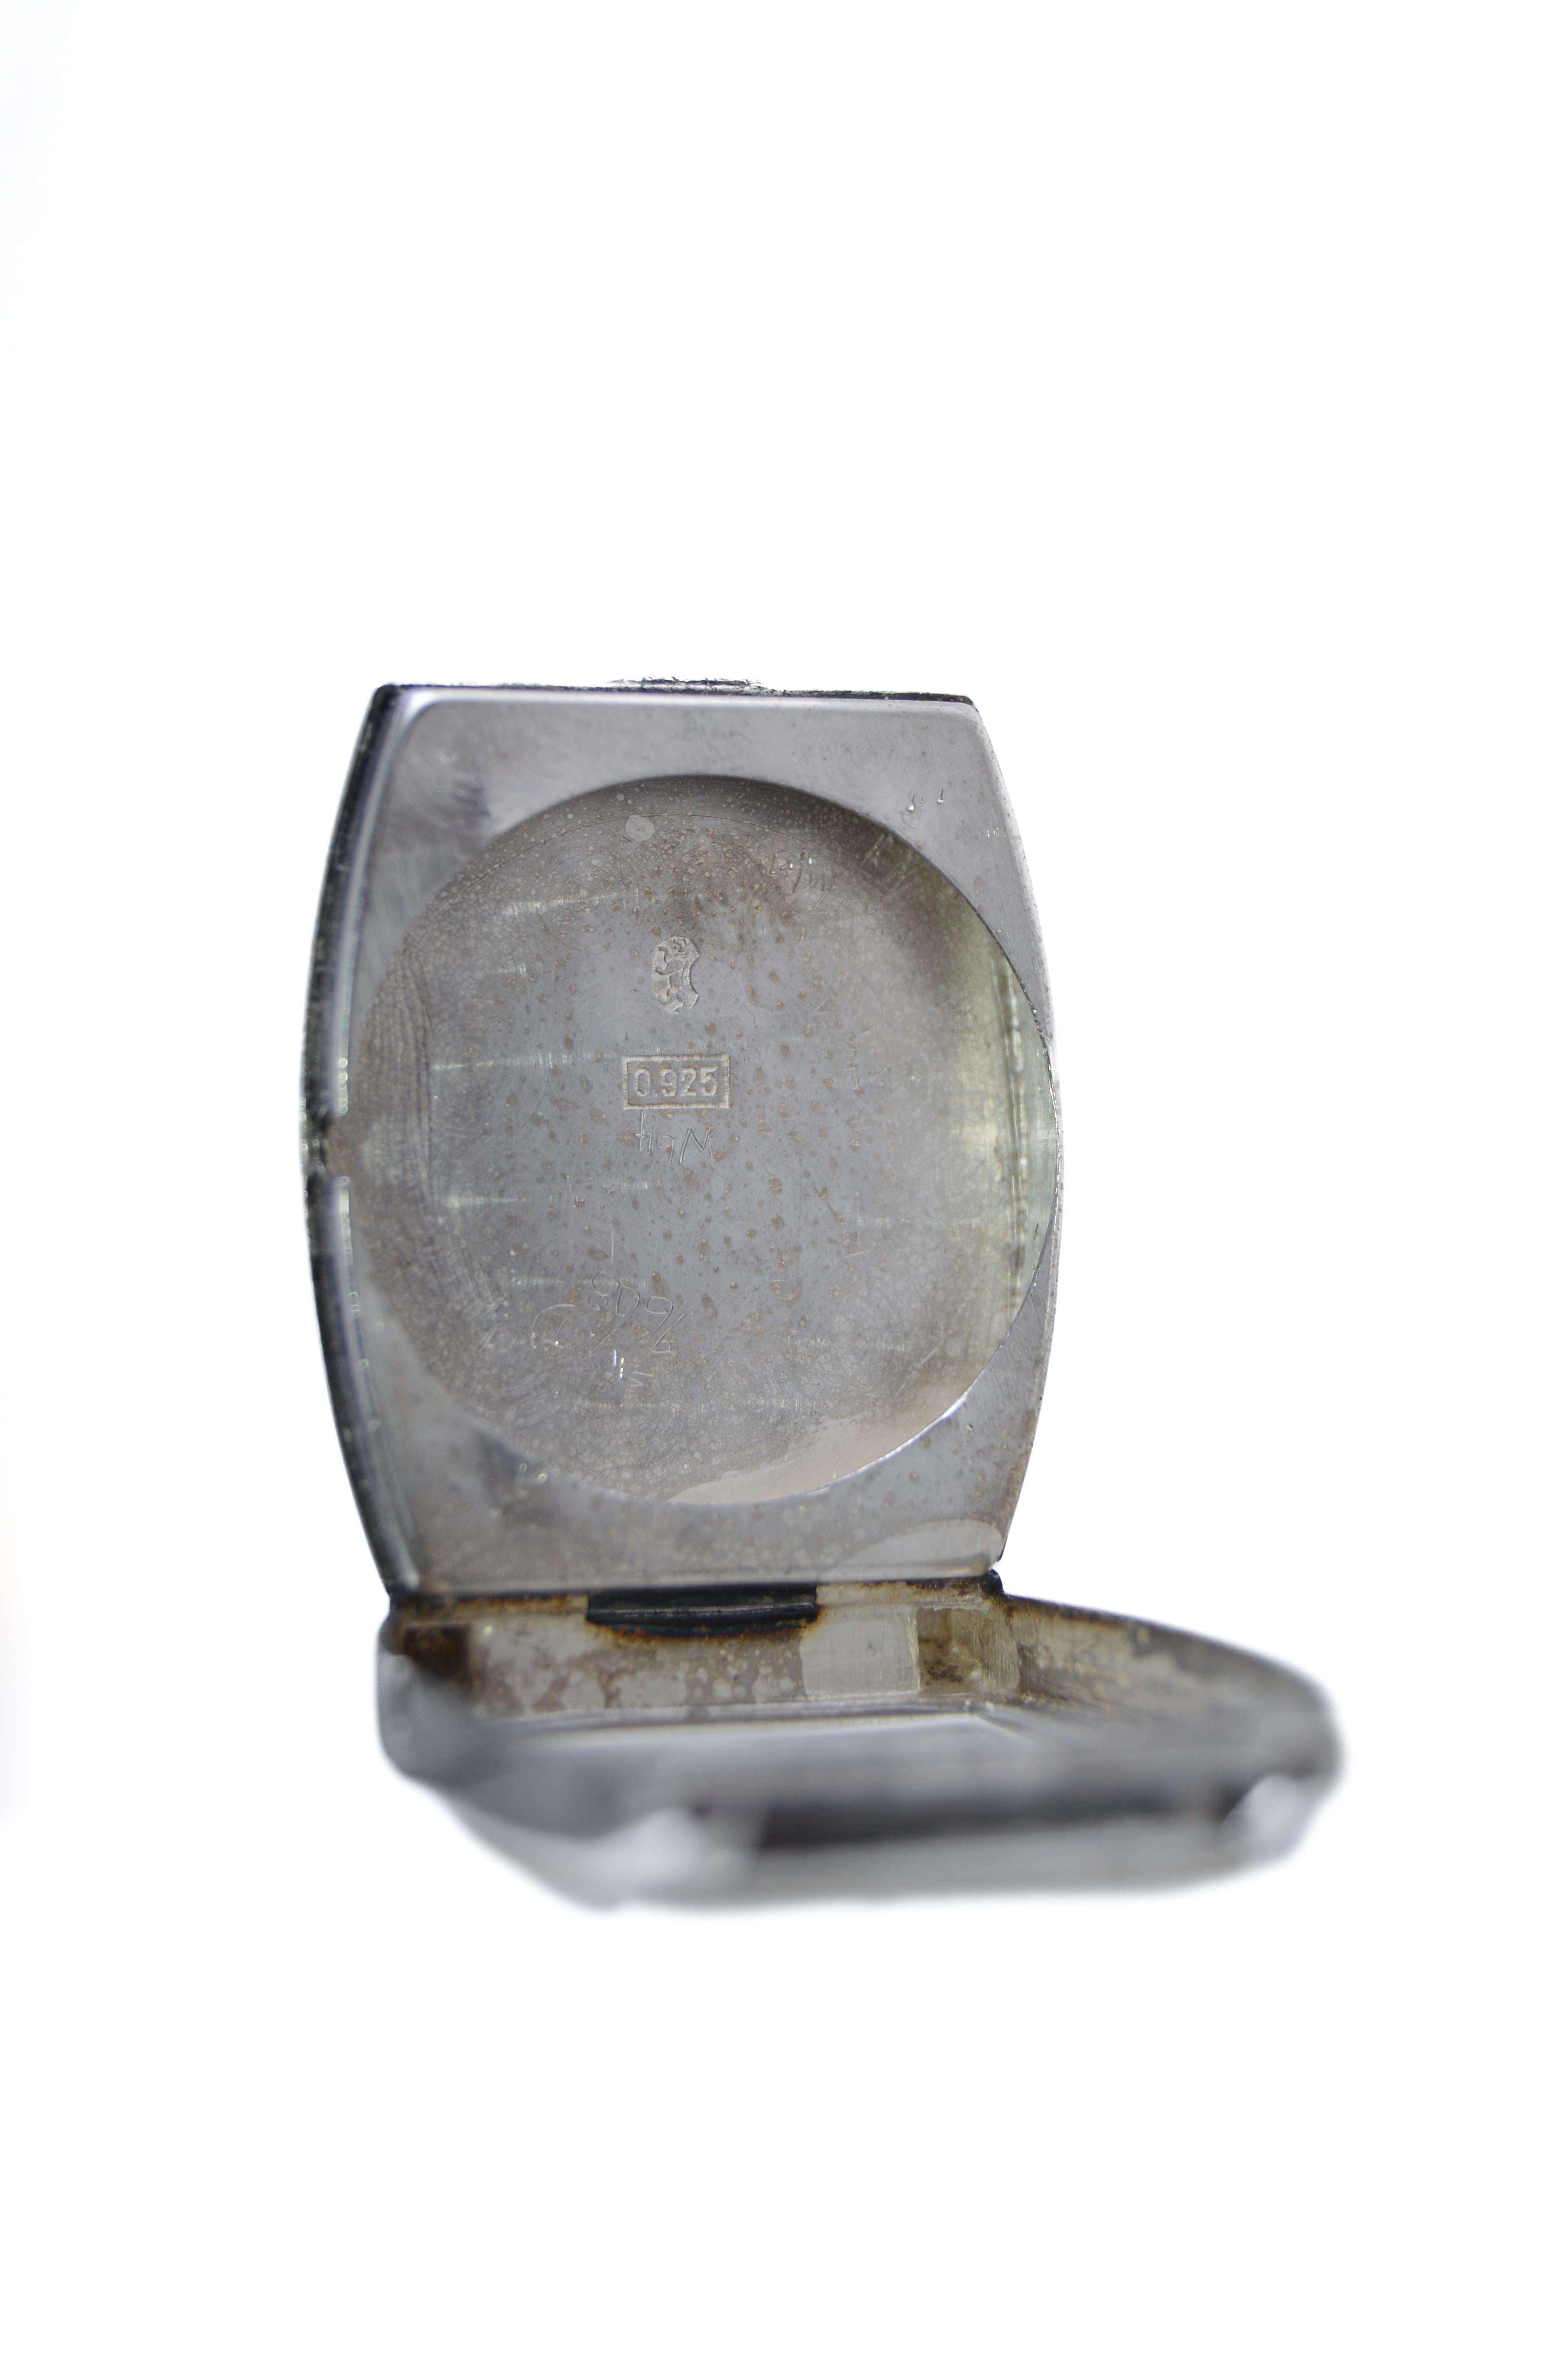 Rolex Silver Tonneau Shape with Rare Original Breguet Engine Turned Dial 1920's For Sale 4